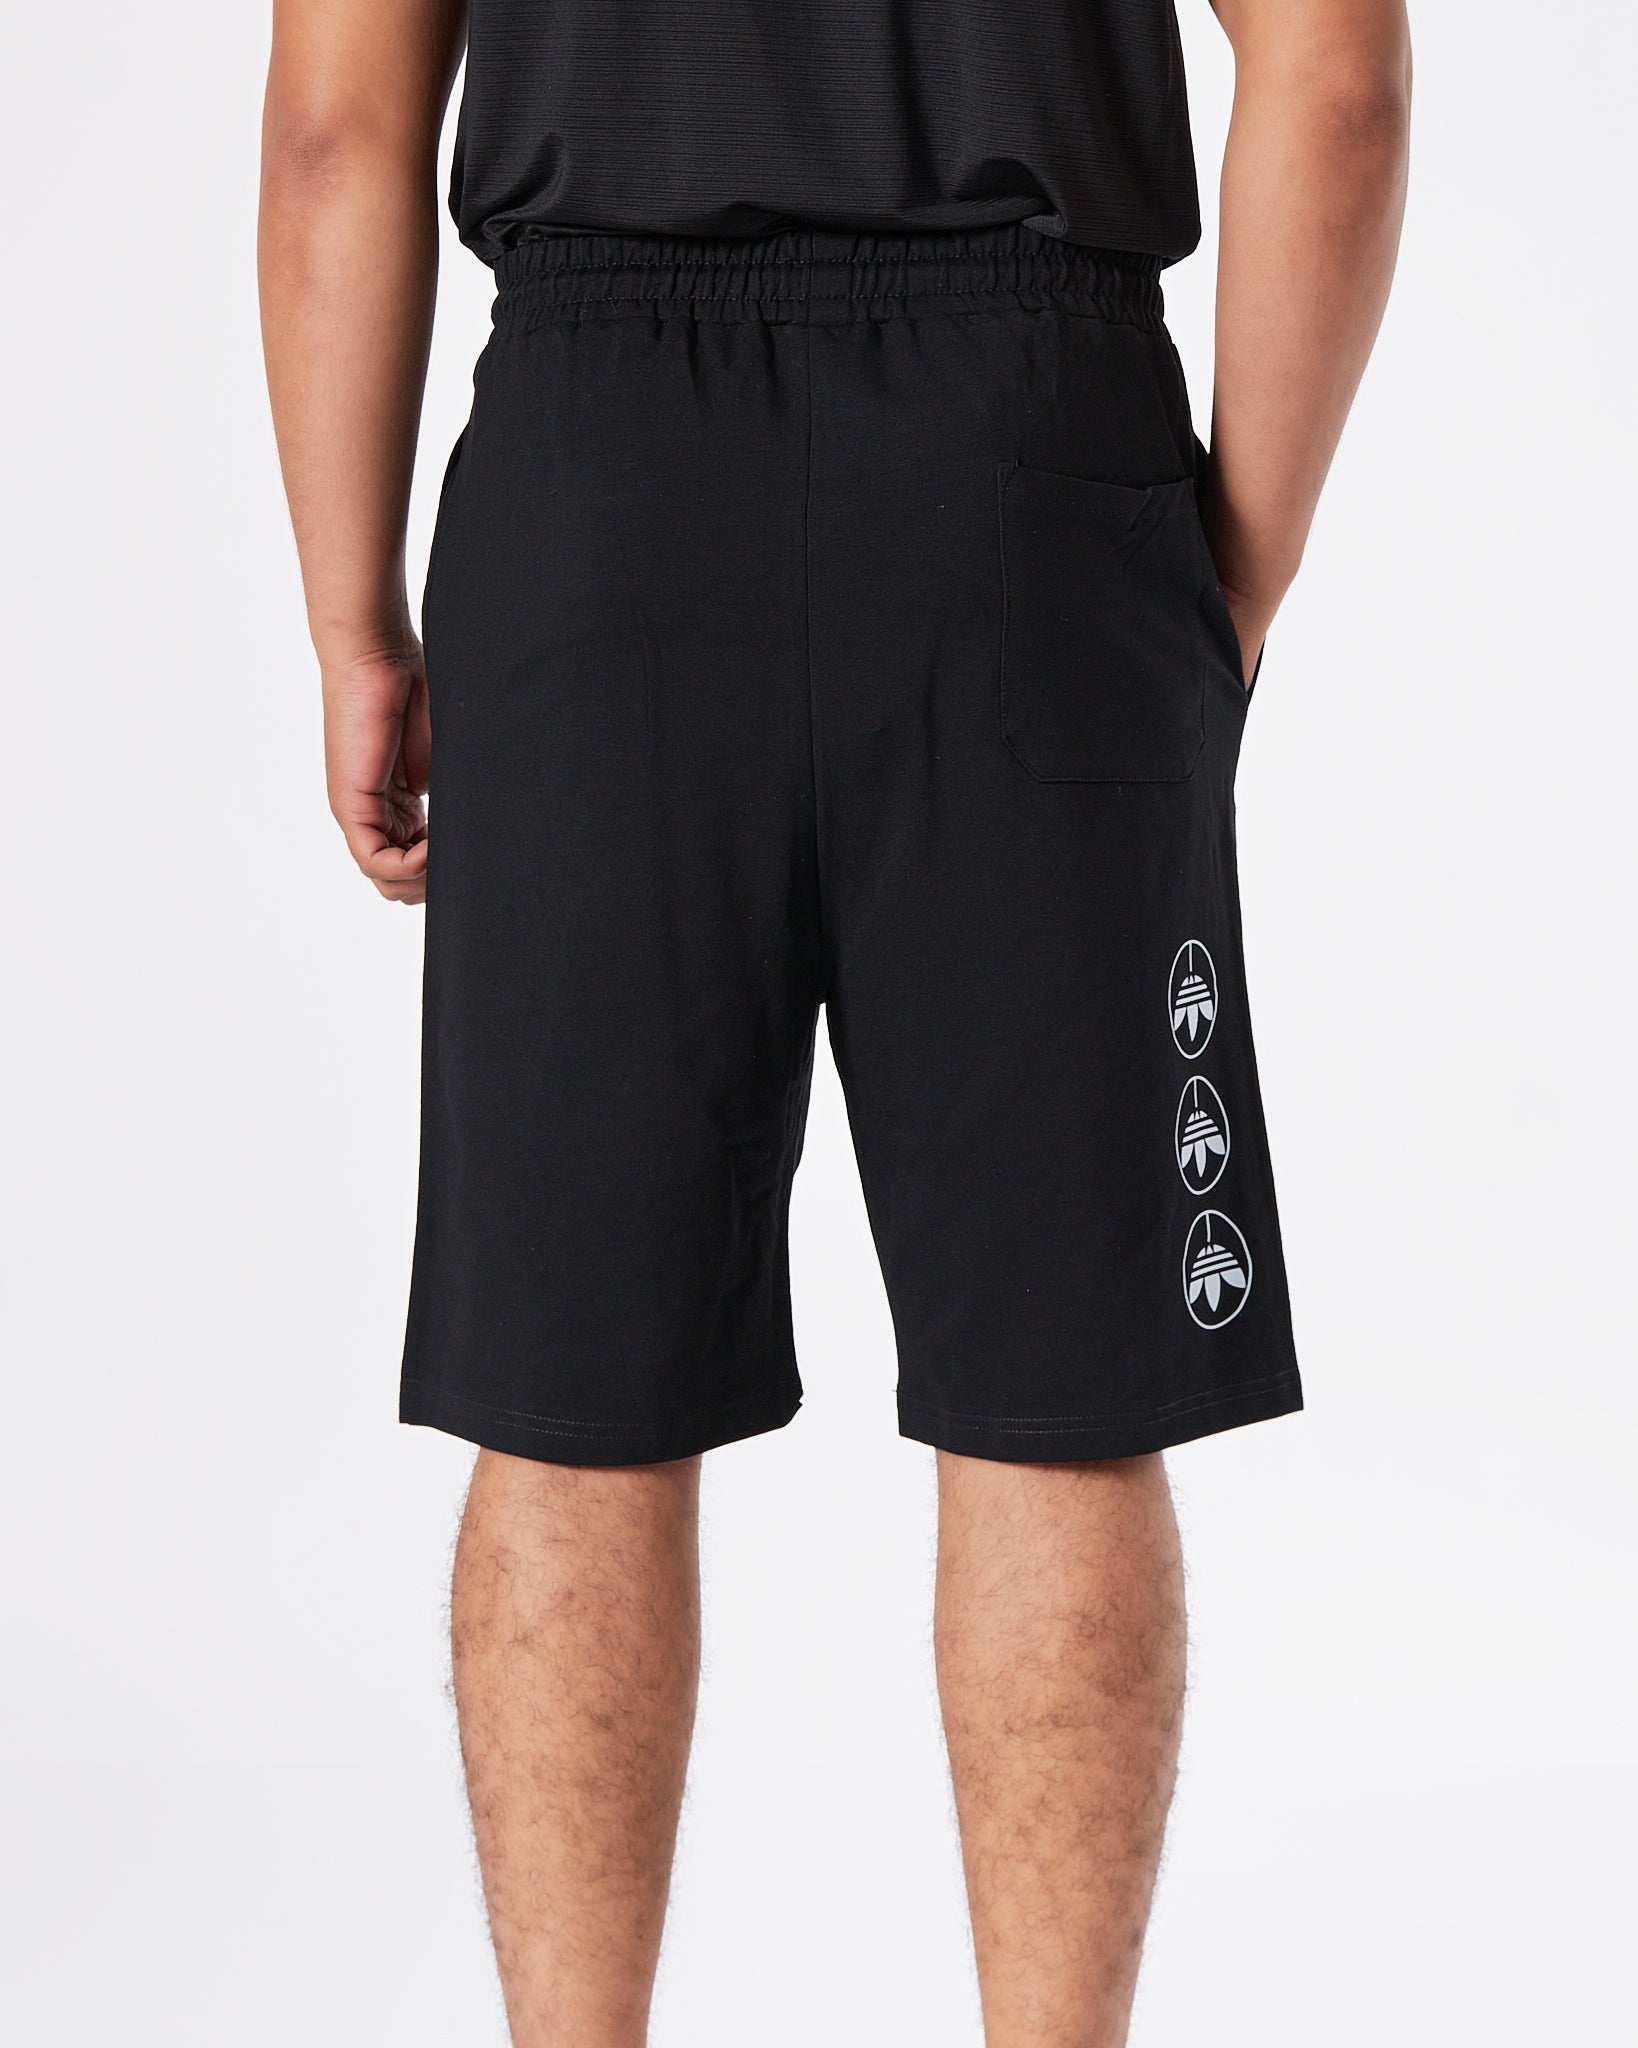 ADI Logo Printed Men Black Shorts 16.90